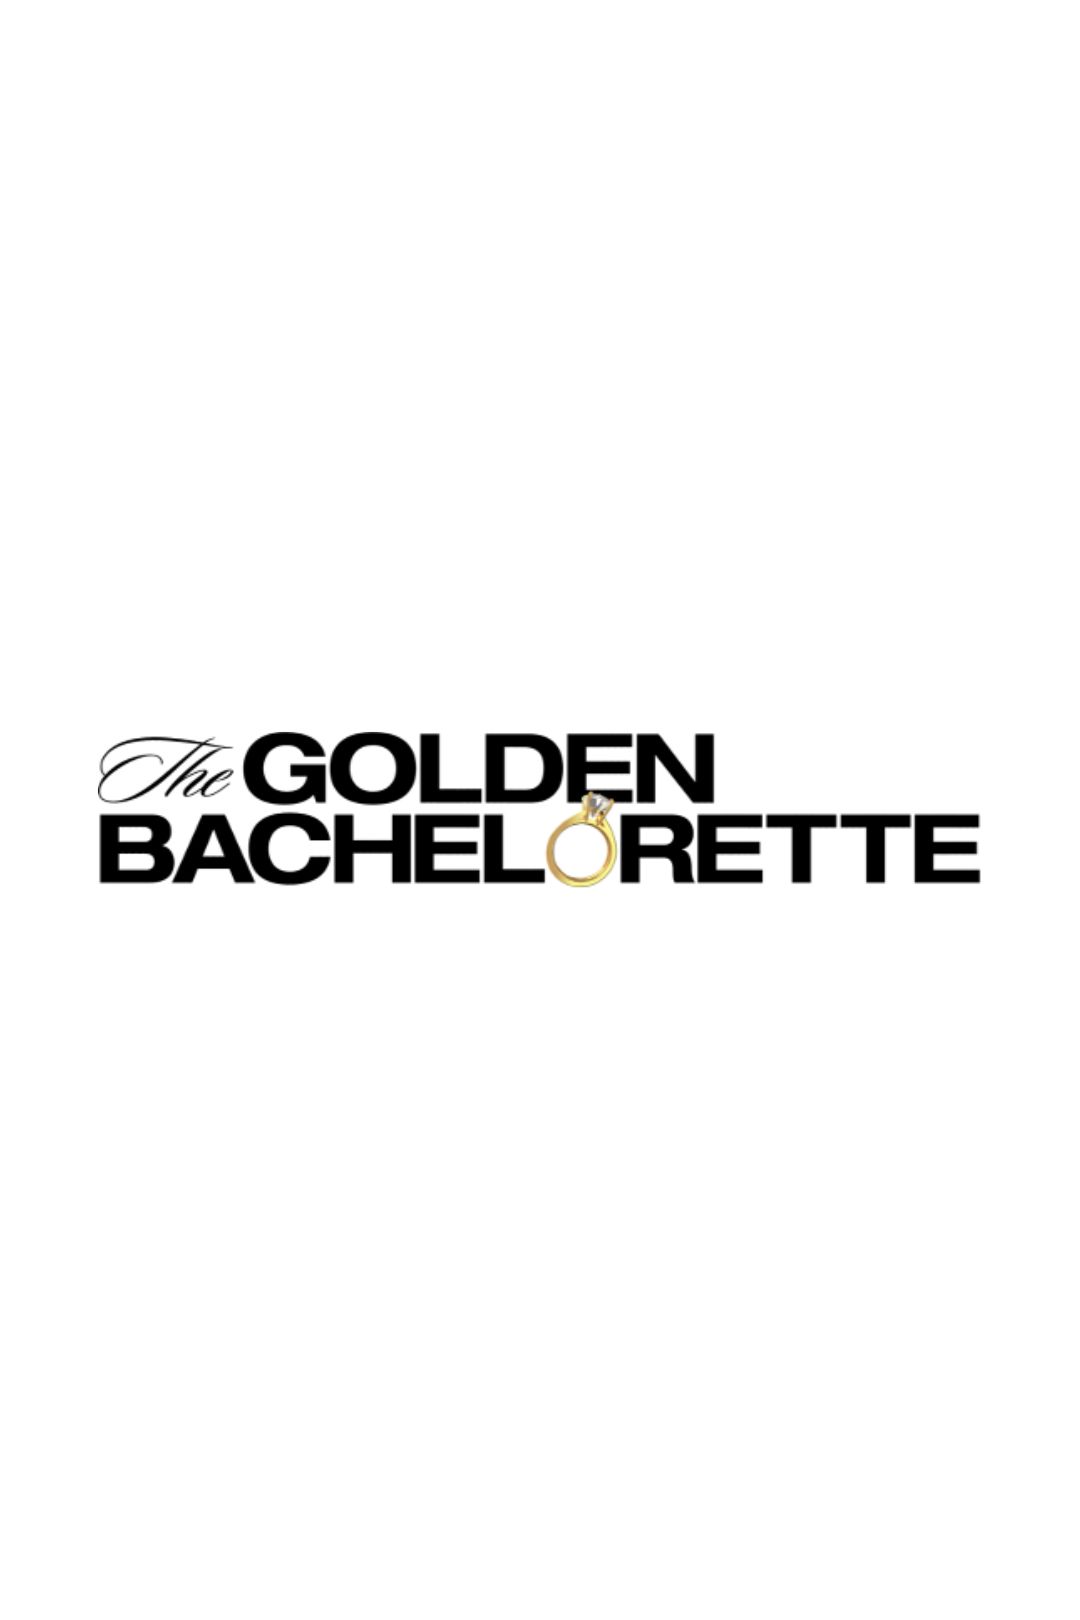 Pôster O Logotipo Dourado do Temp da Bachelorette